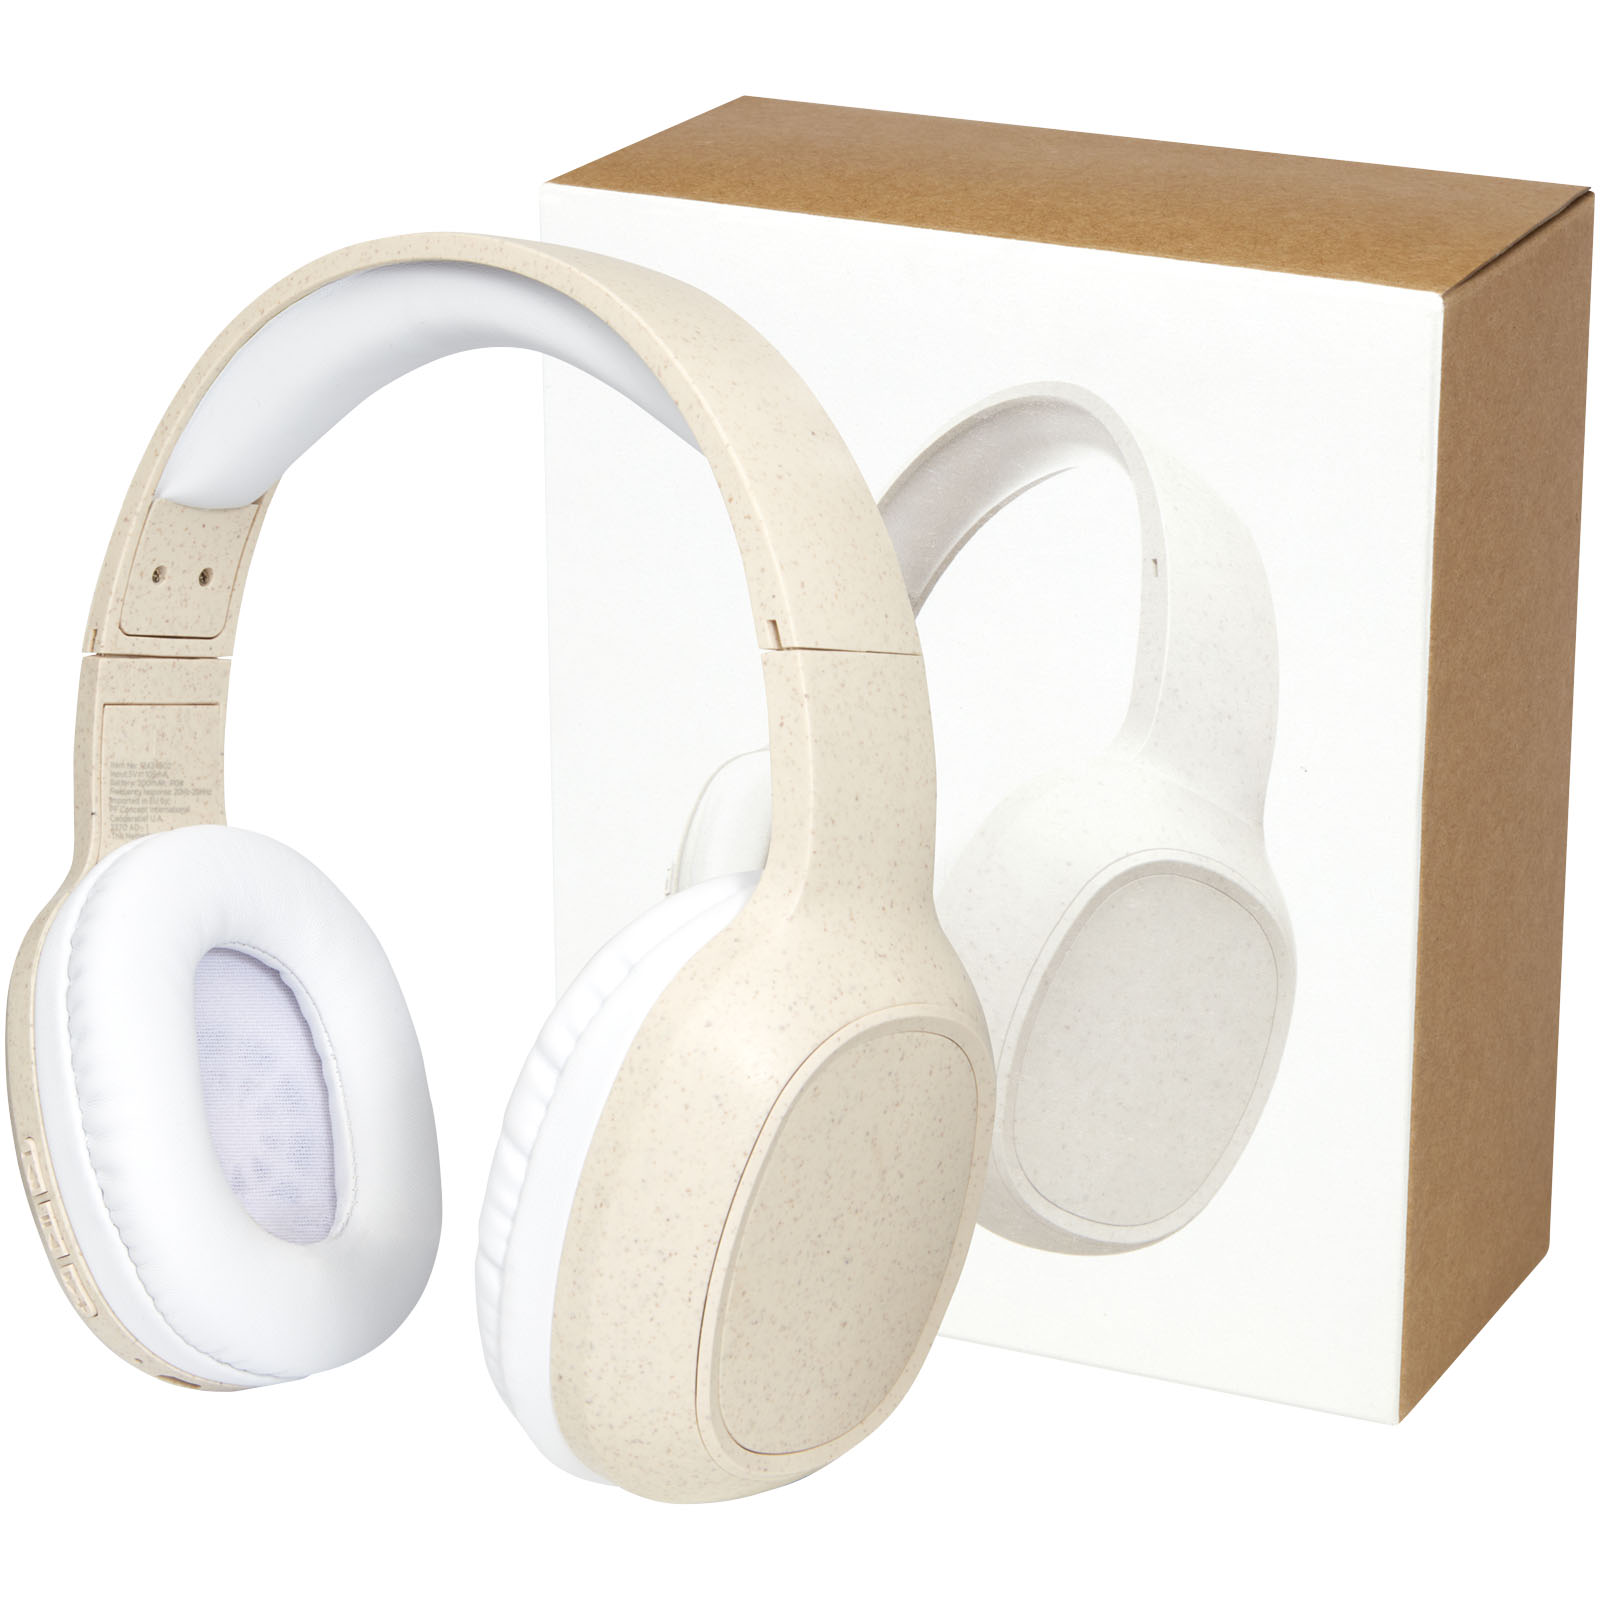 Advertising Headphones - Riff wheat straw Bluetooth® headphones with microphone - 3